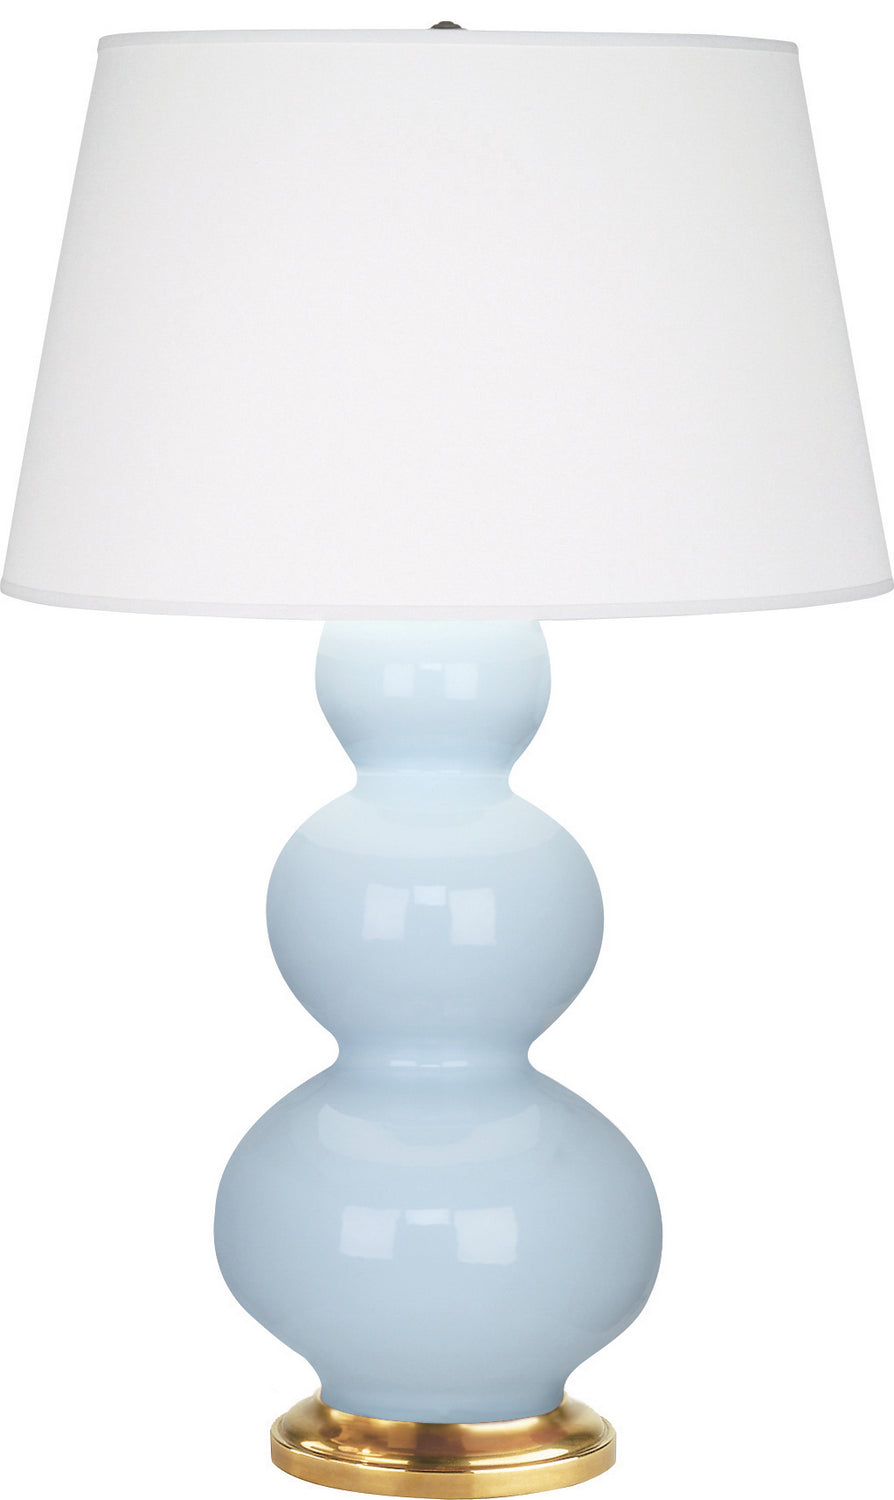 Robert Abbey - One Light Table Lamp - Triple Gourd - Baby Blue Glazed Ceramic w/Antique Natural Brass- Union Lighting Luminaires Decor